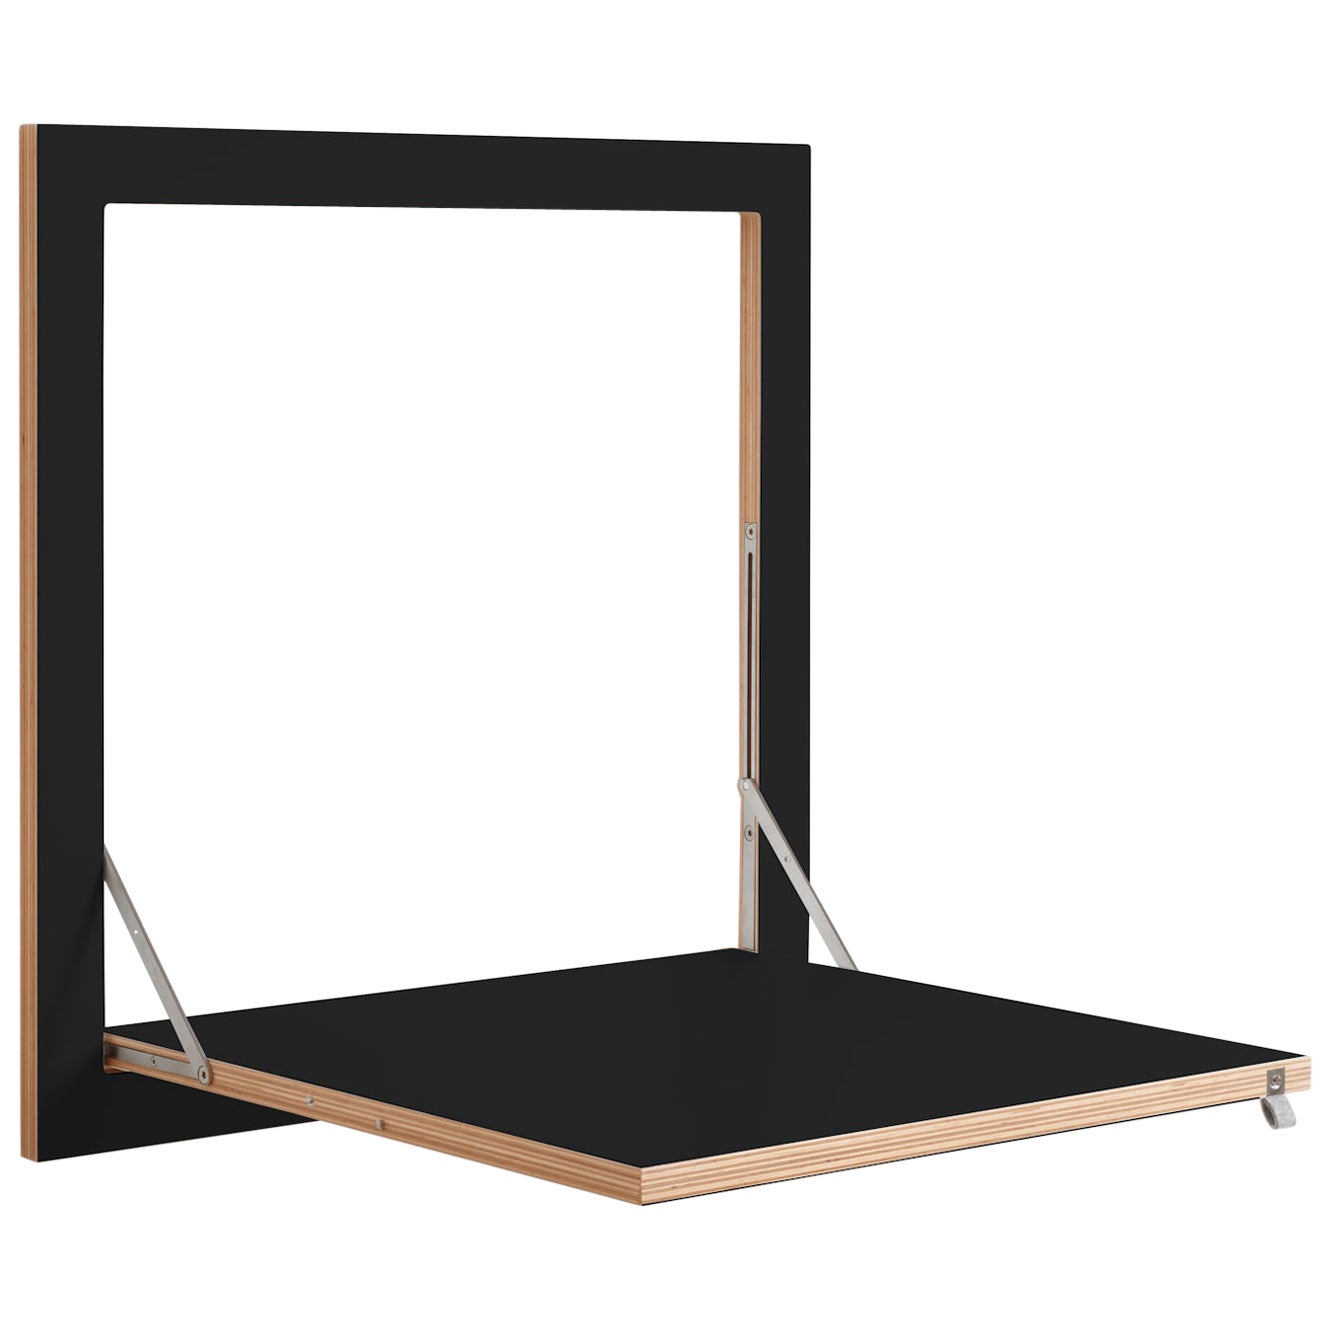 Fläpps Kitchen Table 60x60-1 - Black For Sale